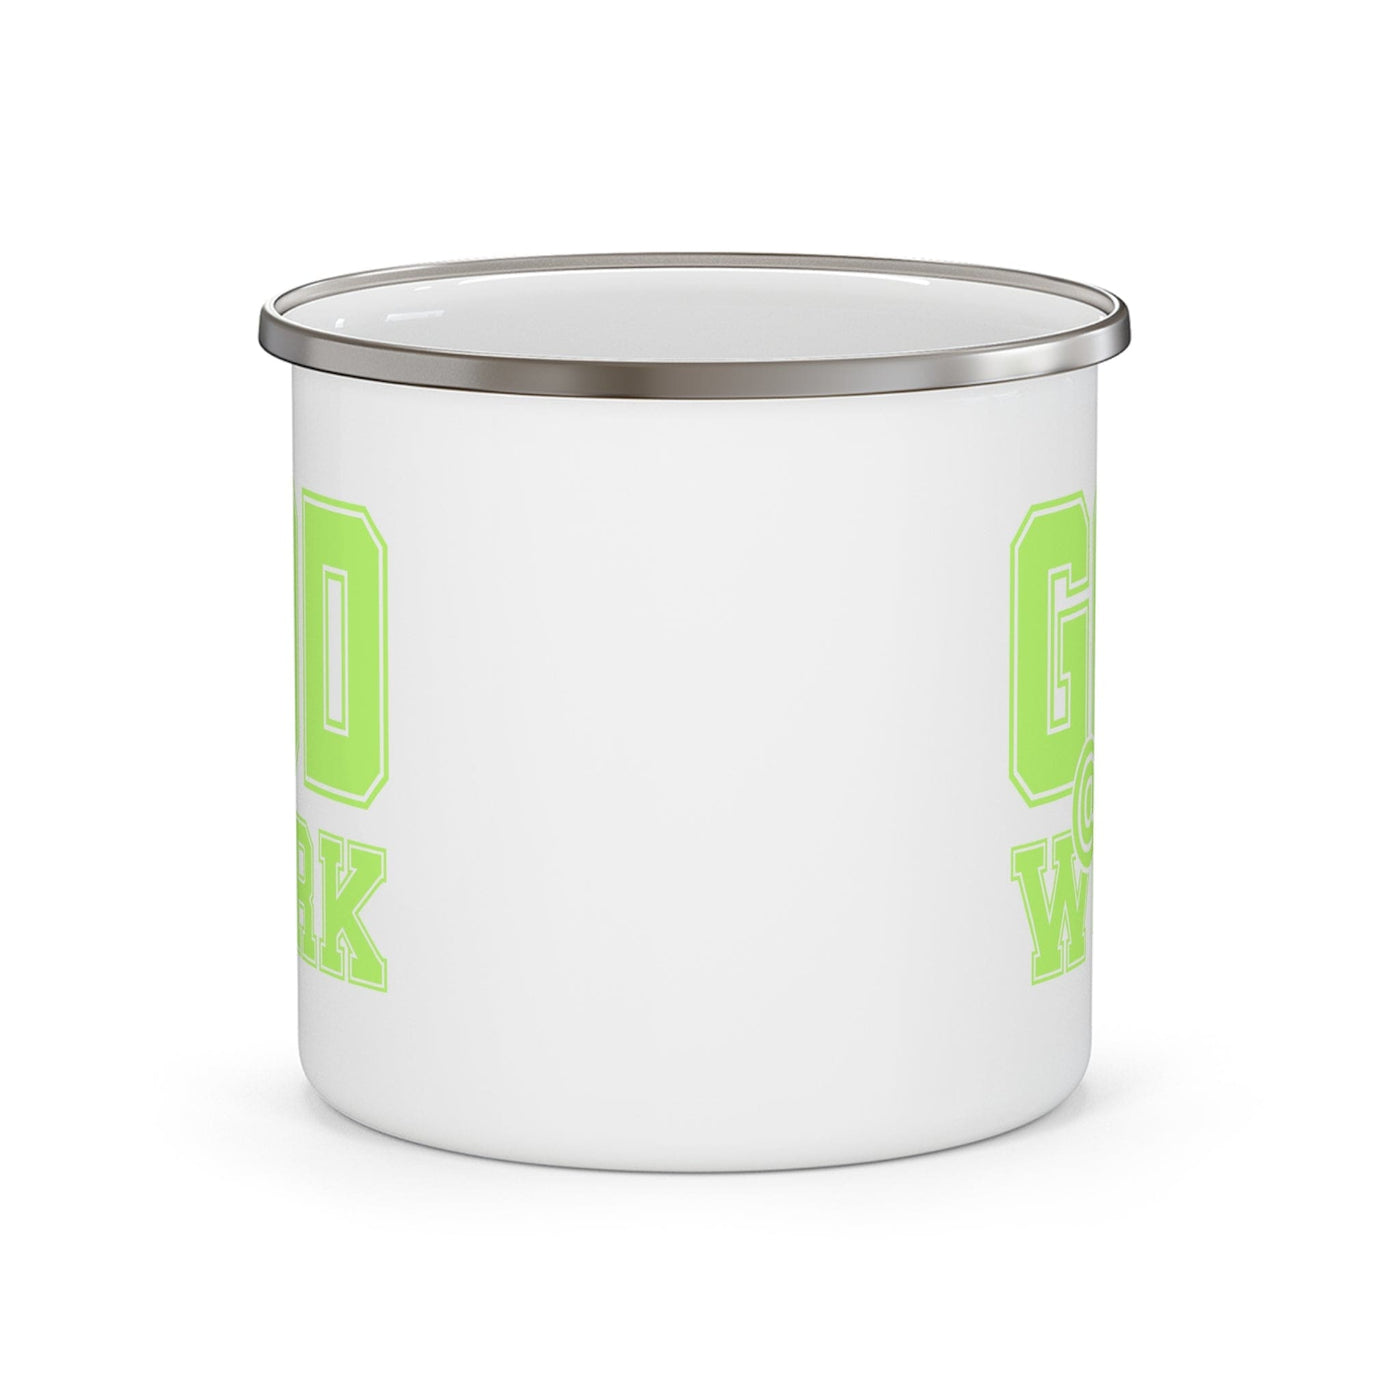 Enamel Camping Mug God @ Work Neon Green And White Print - Decorative | Mugs